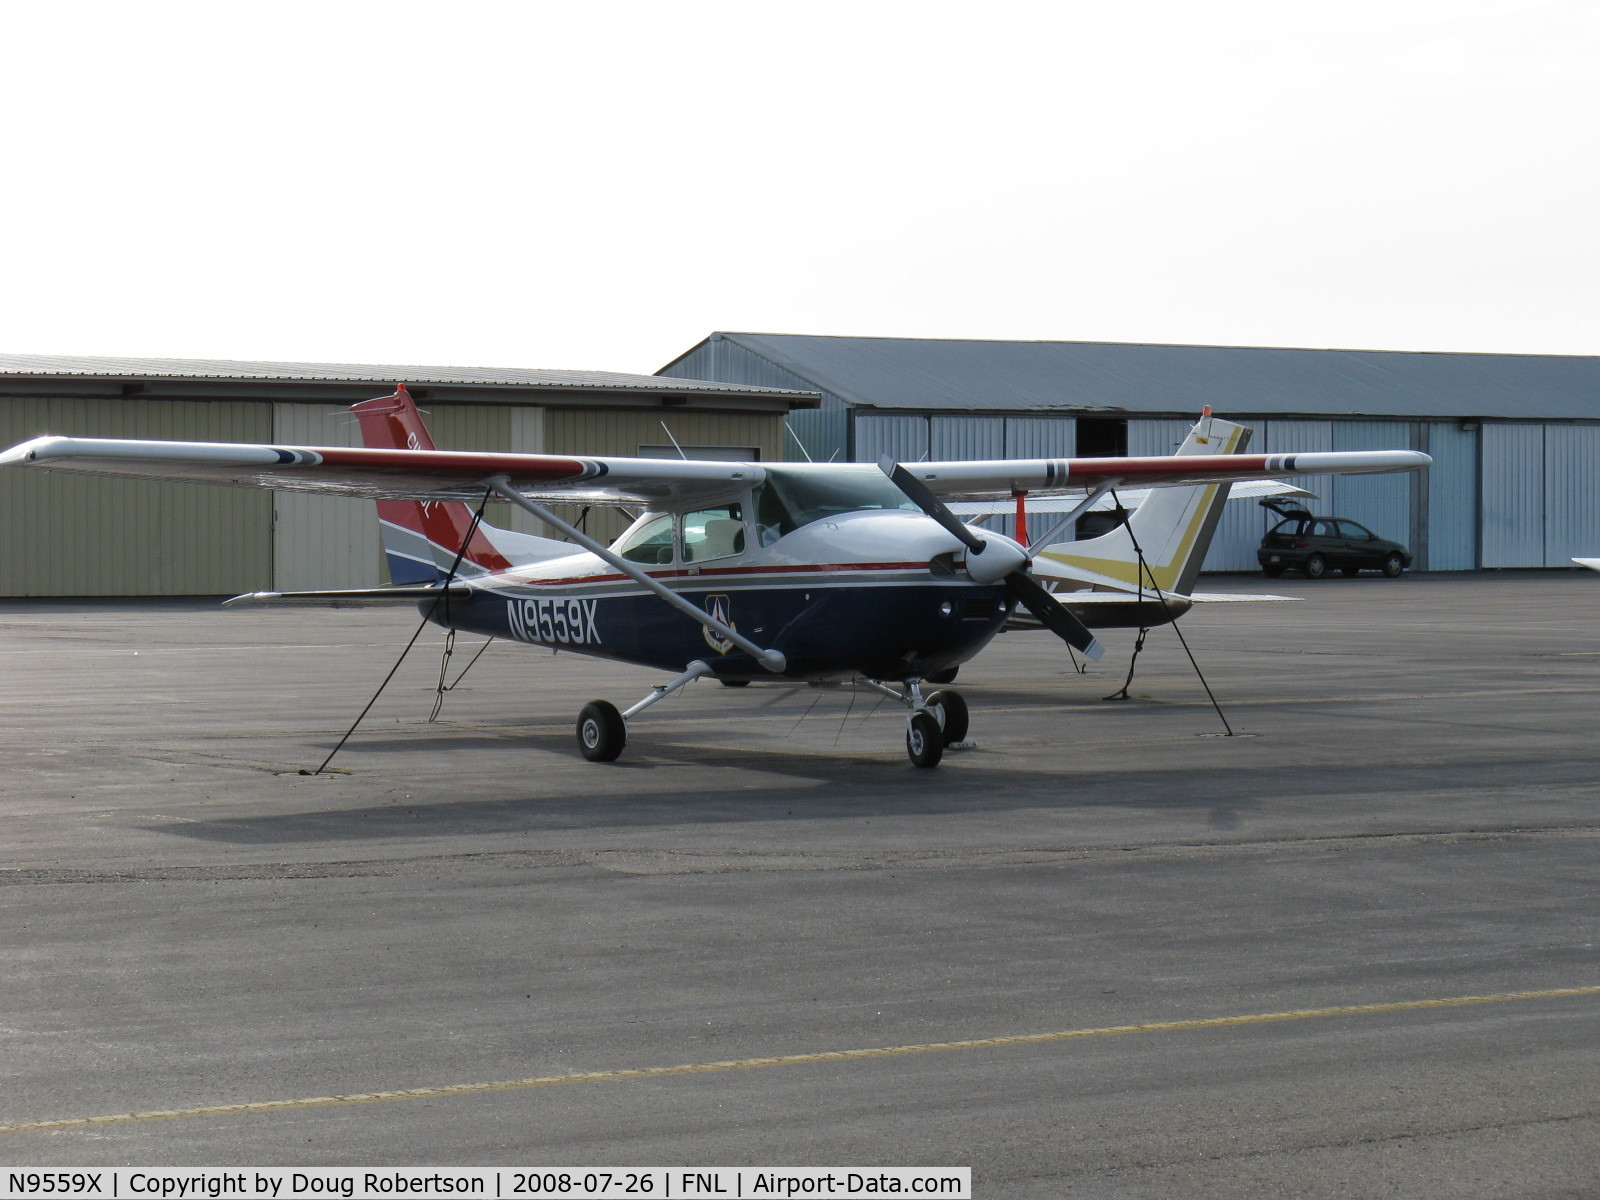 N9559X, 1986 Cessna 182R Skylane C/N 18268555, 1986 Cessna 182R SKYLANE of Civil Air Patrol, Continental O-470-U 230 Hp